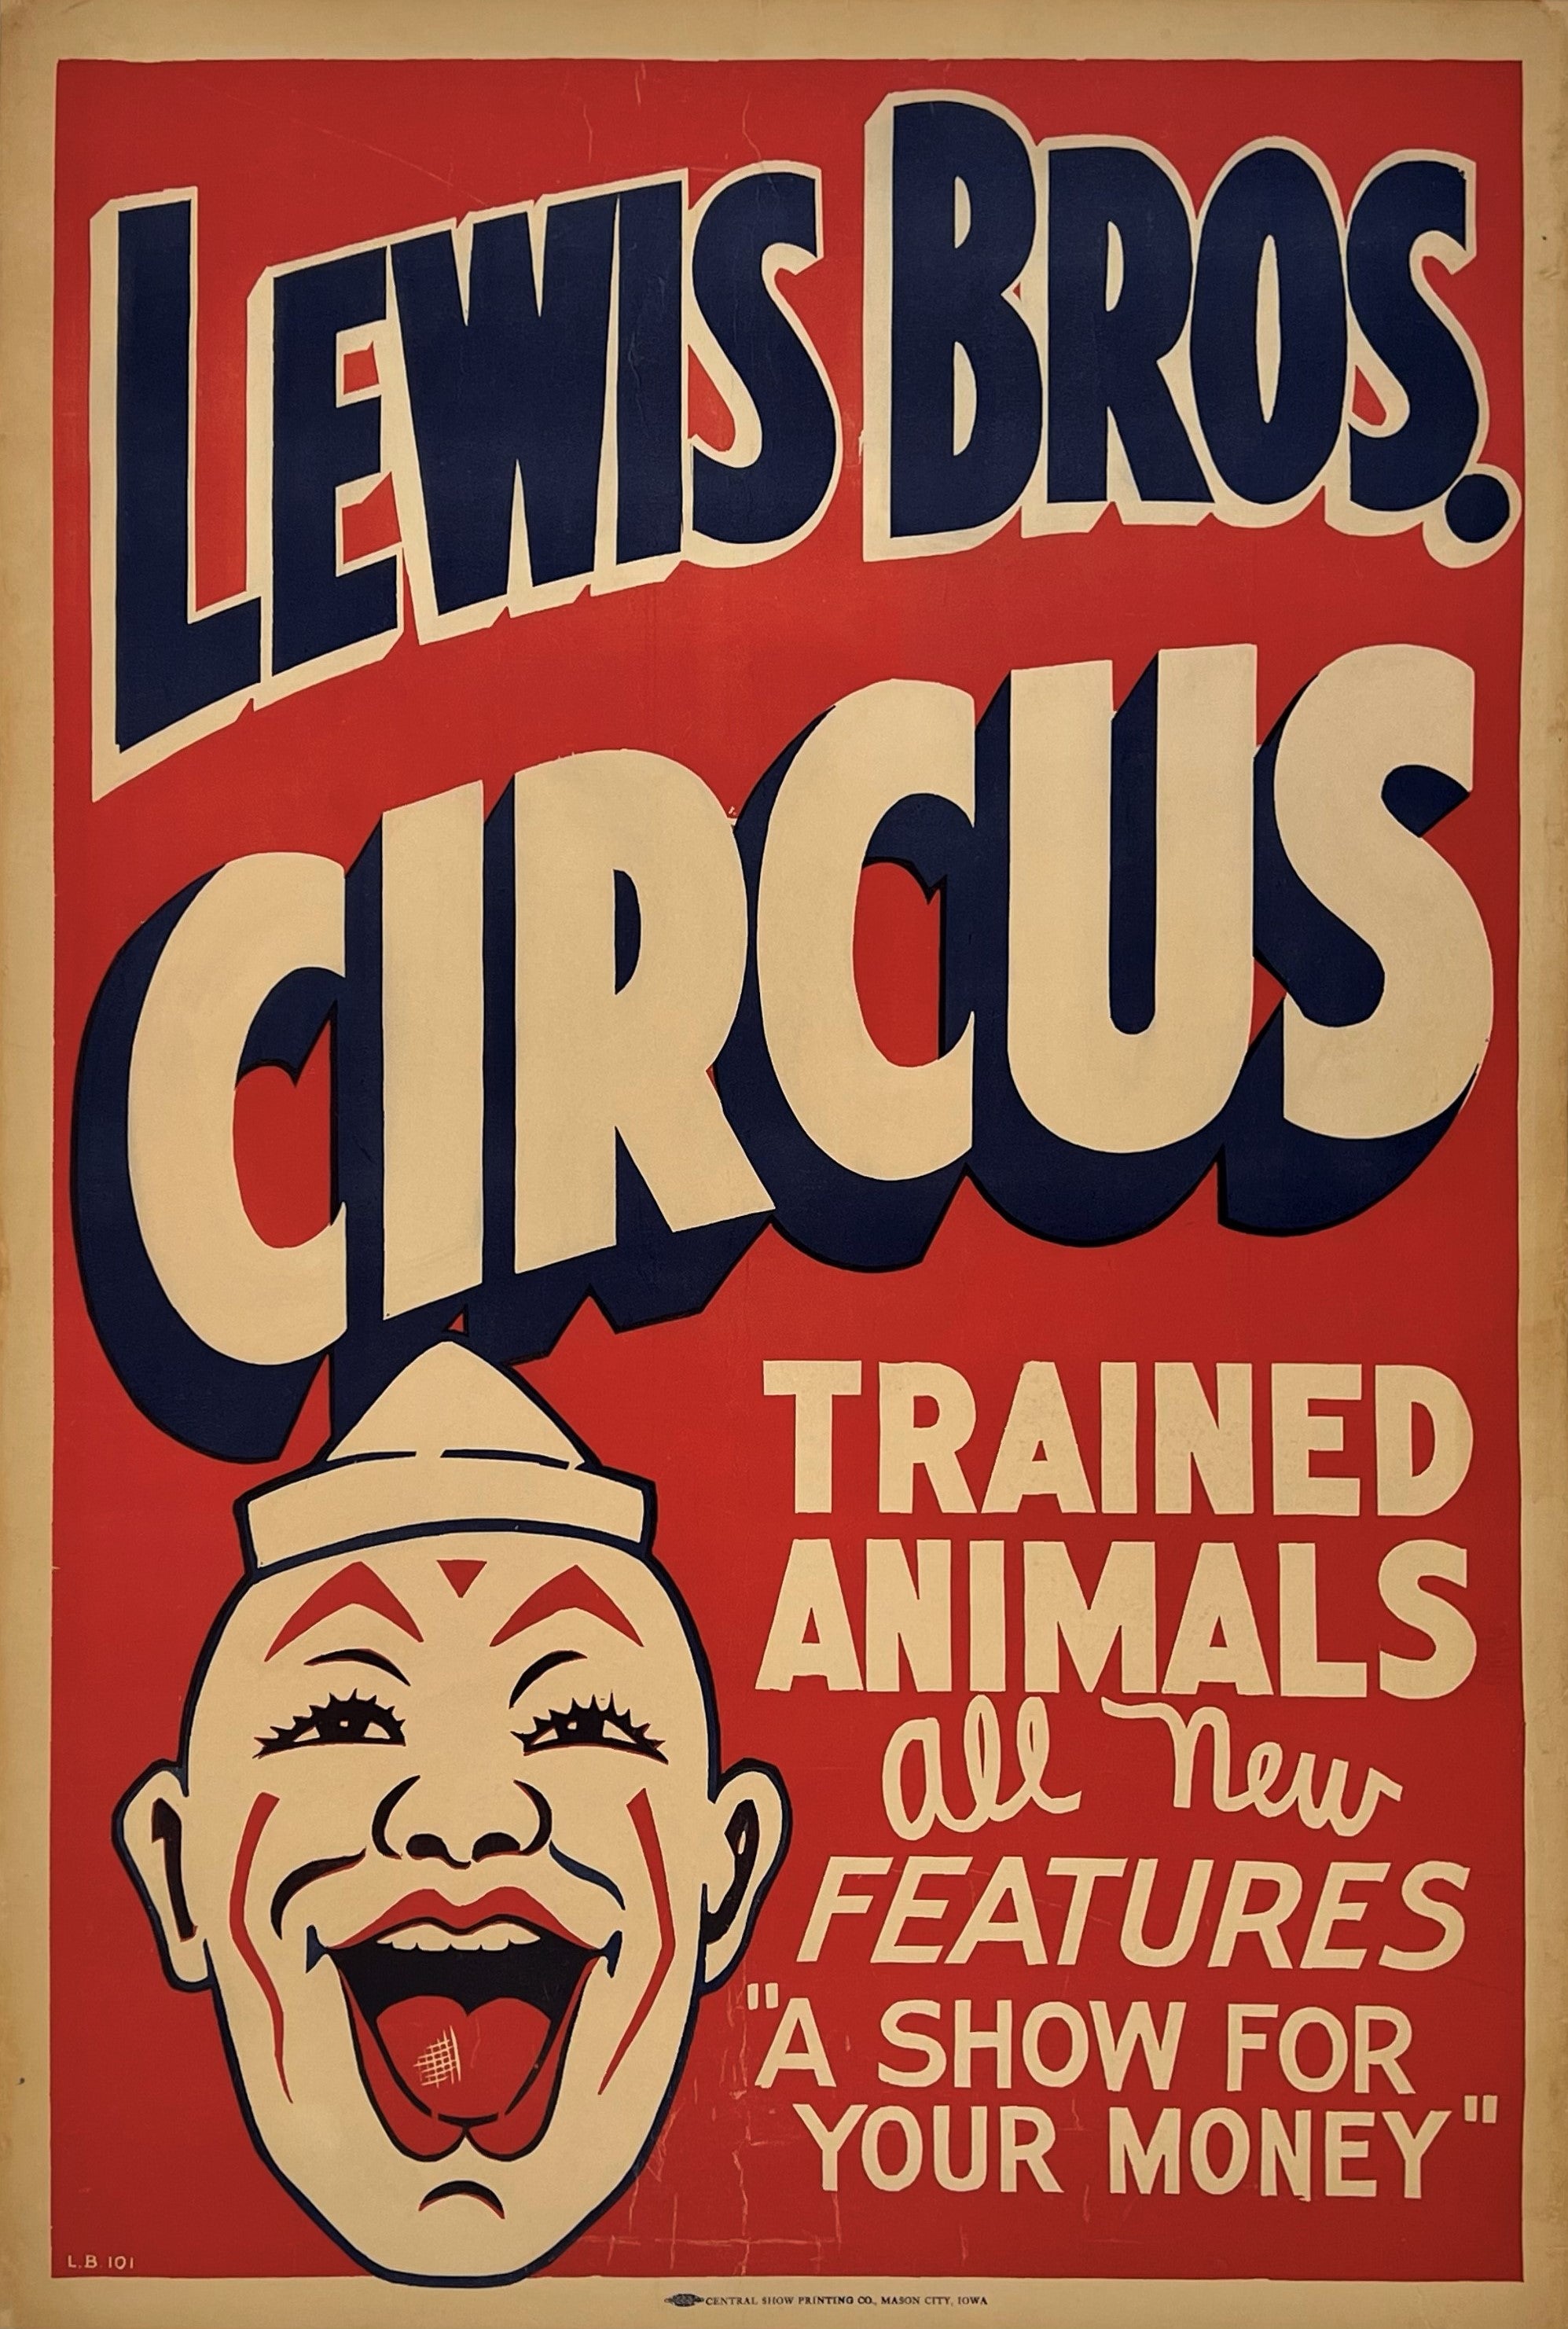 Authentic Vintage Poster | Lewis Bros. Circus